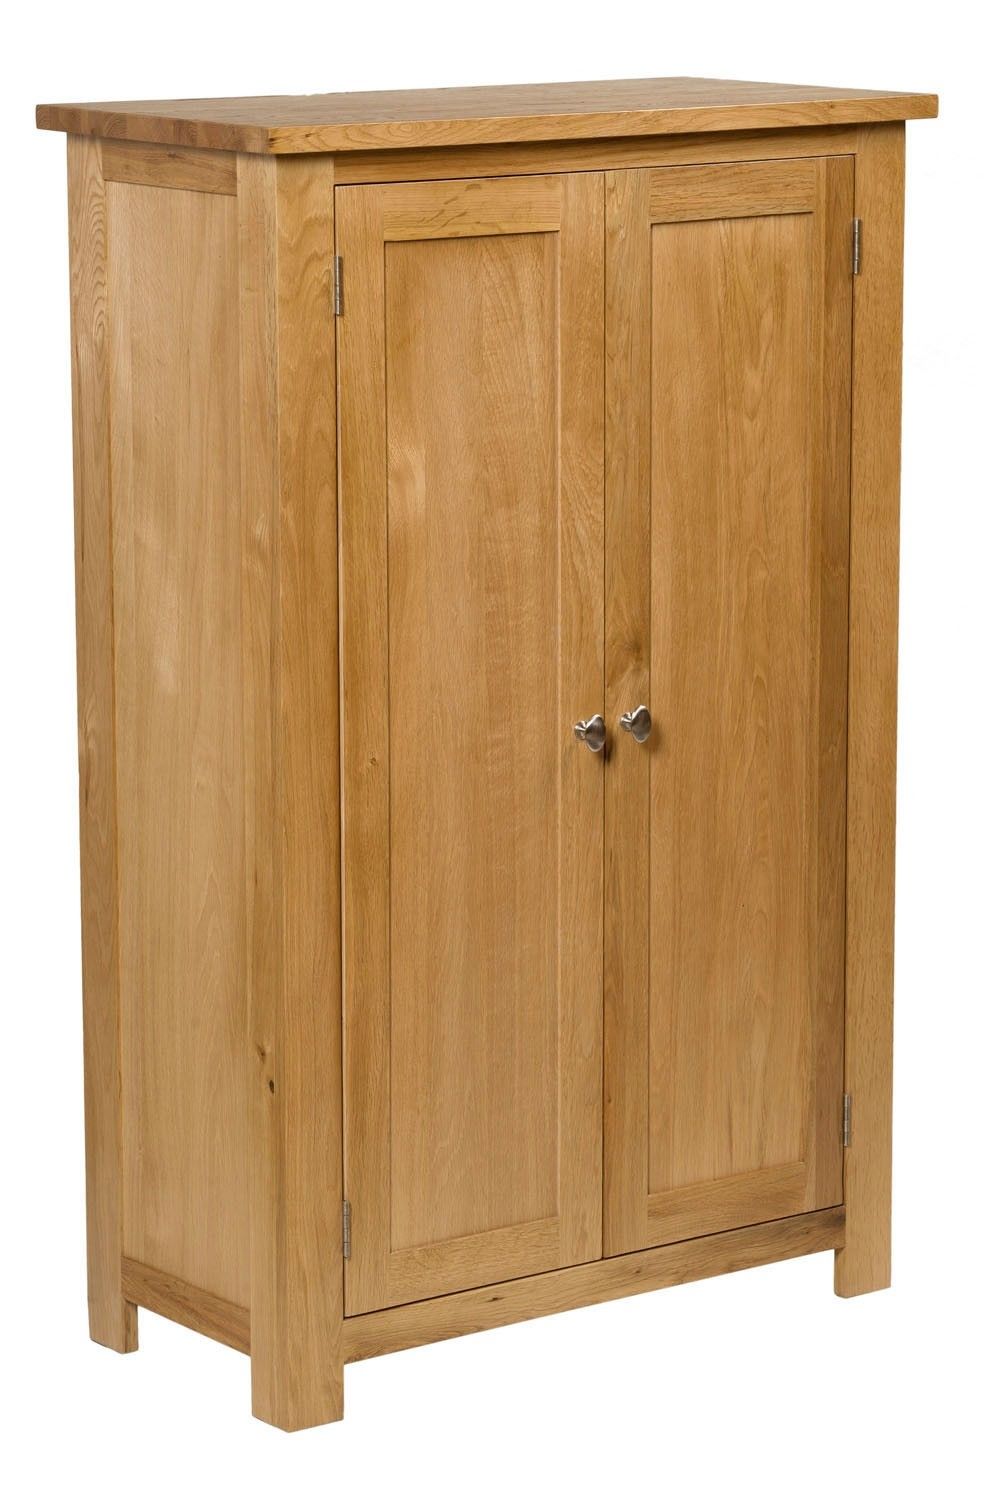 Waverly Oak Small Wide Cabinet Cupboard With 3 Shelves Hallowood Inside Small Oak Cupboard (View 13 of 15)